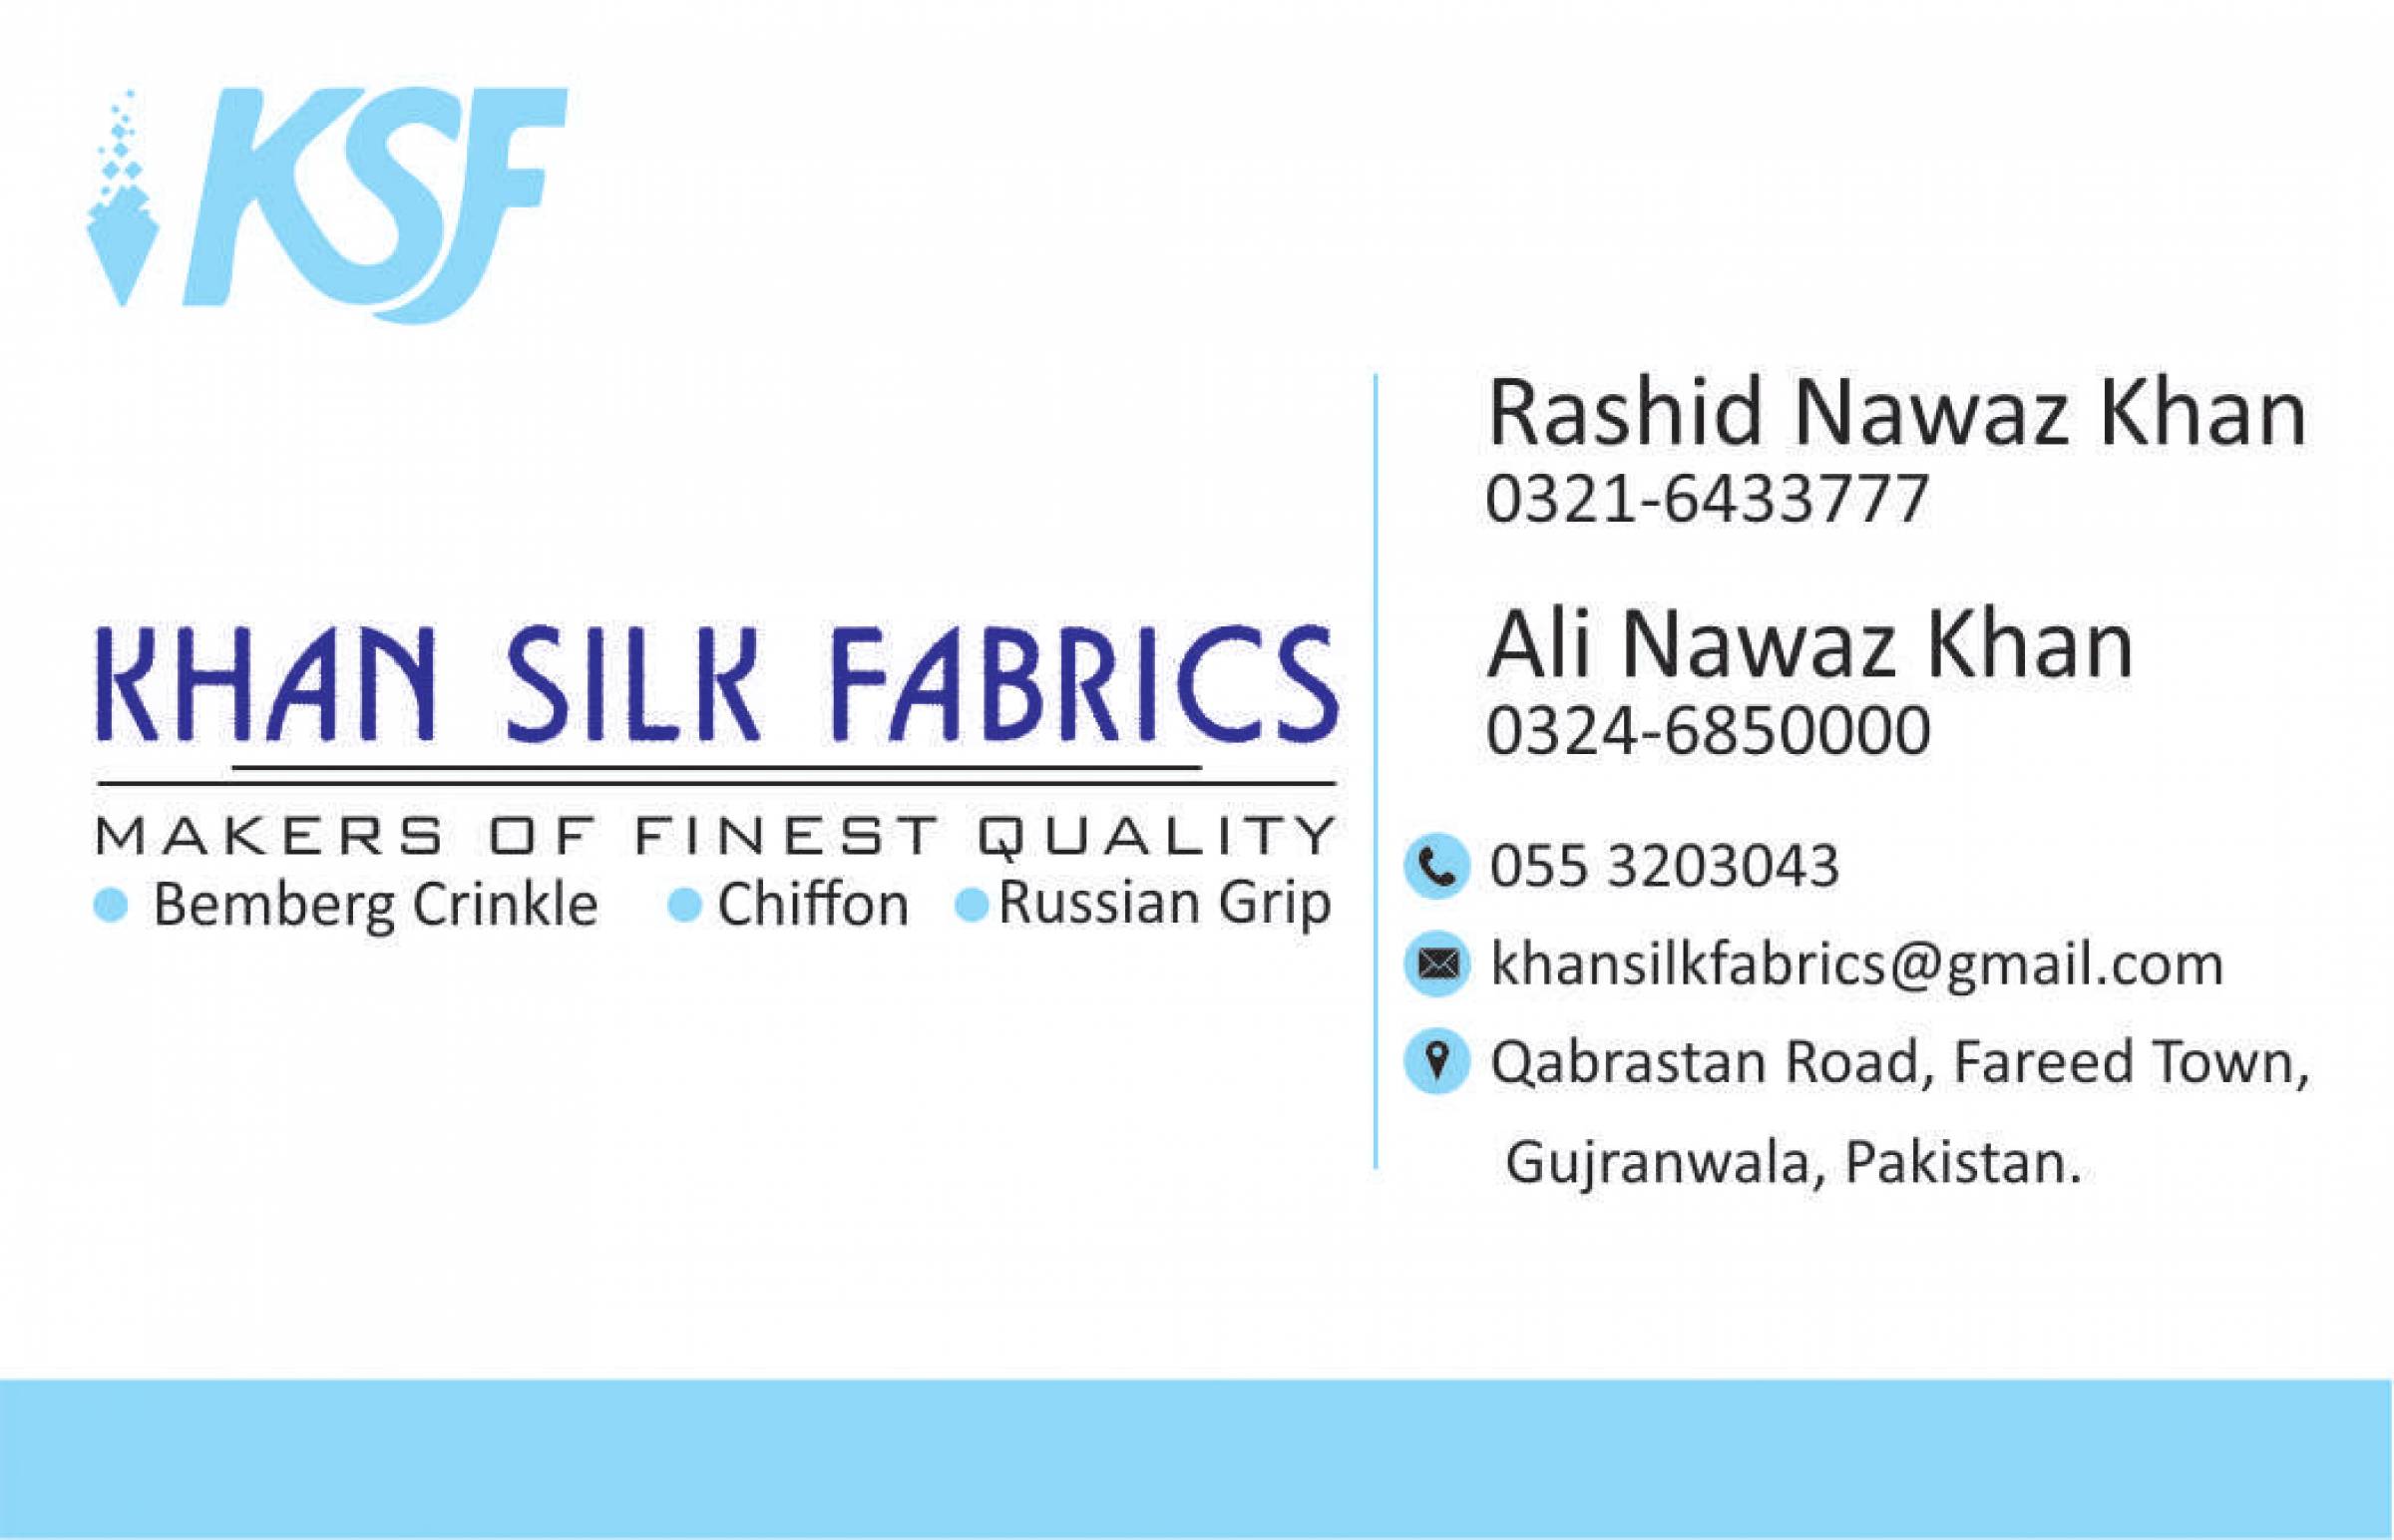 Khan Silk Fabrics